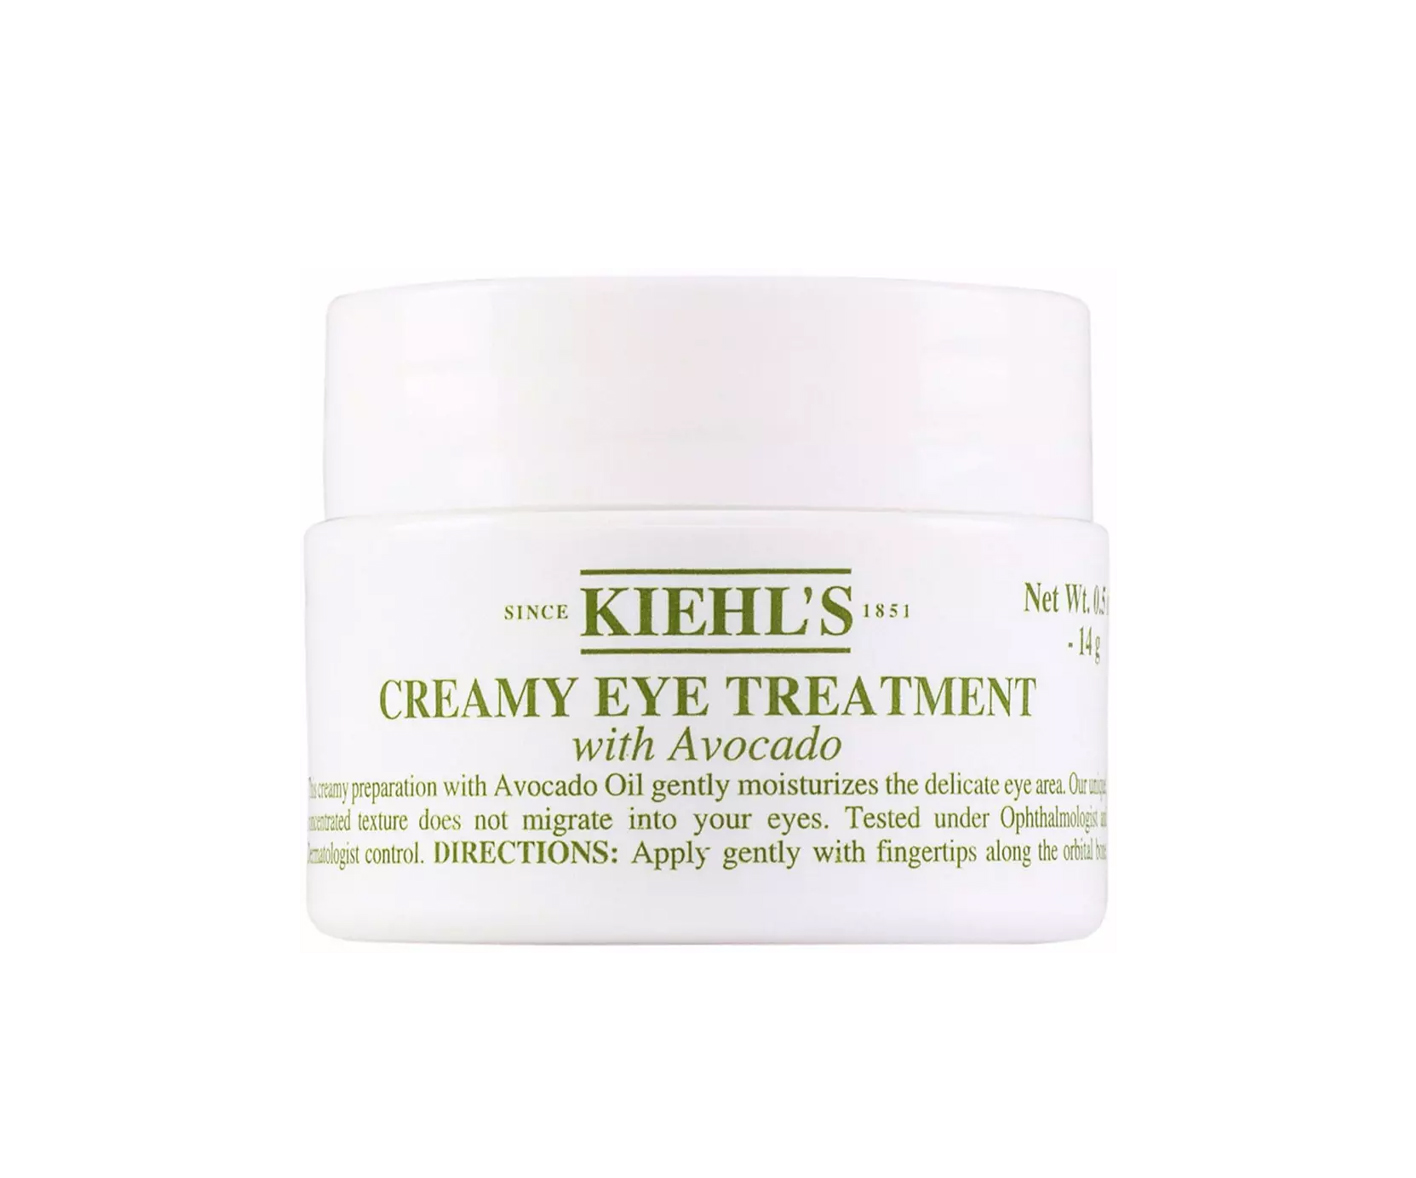 Kiehl's, Creamy Eye Treatment, Crema balsamo Contorno Occhi con avocado